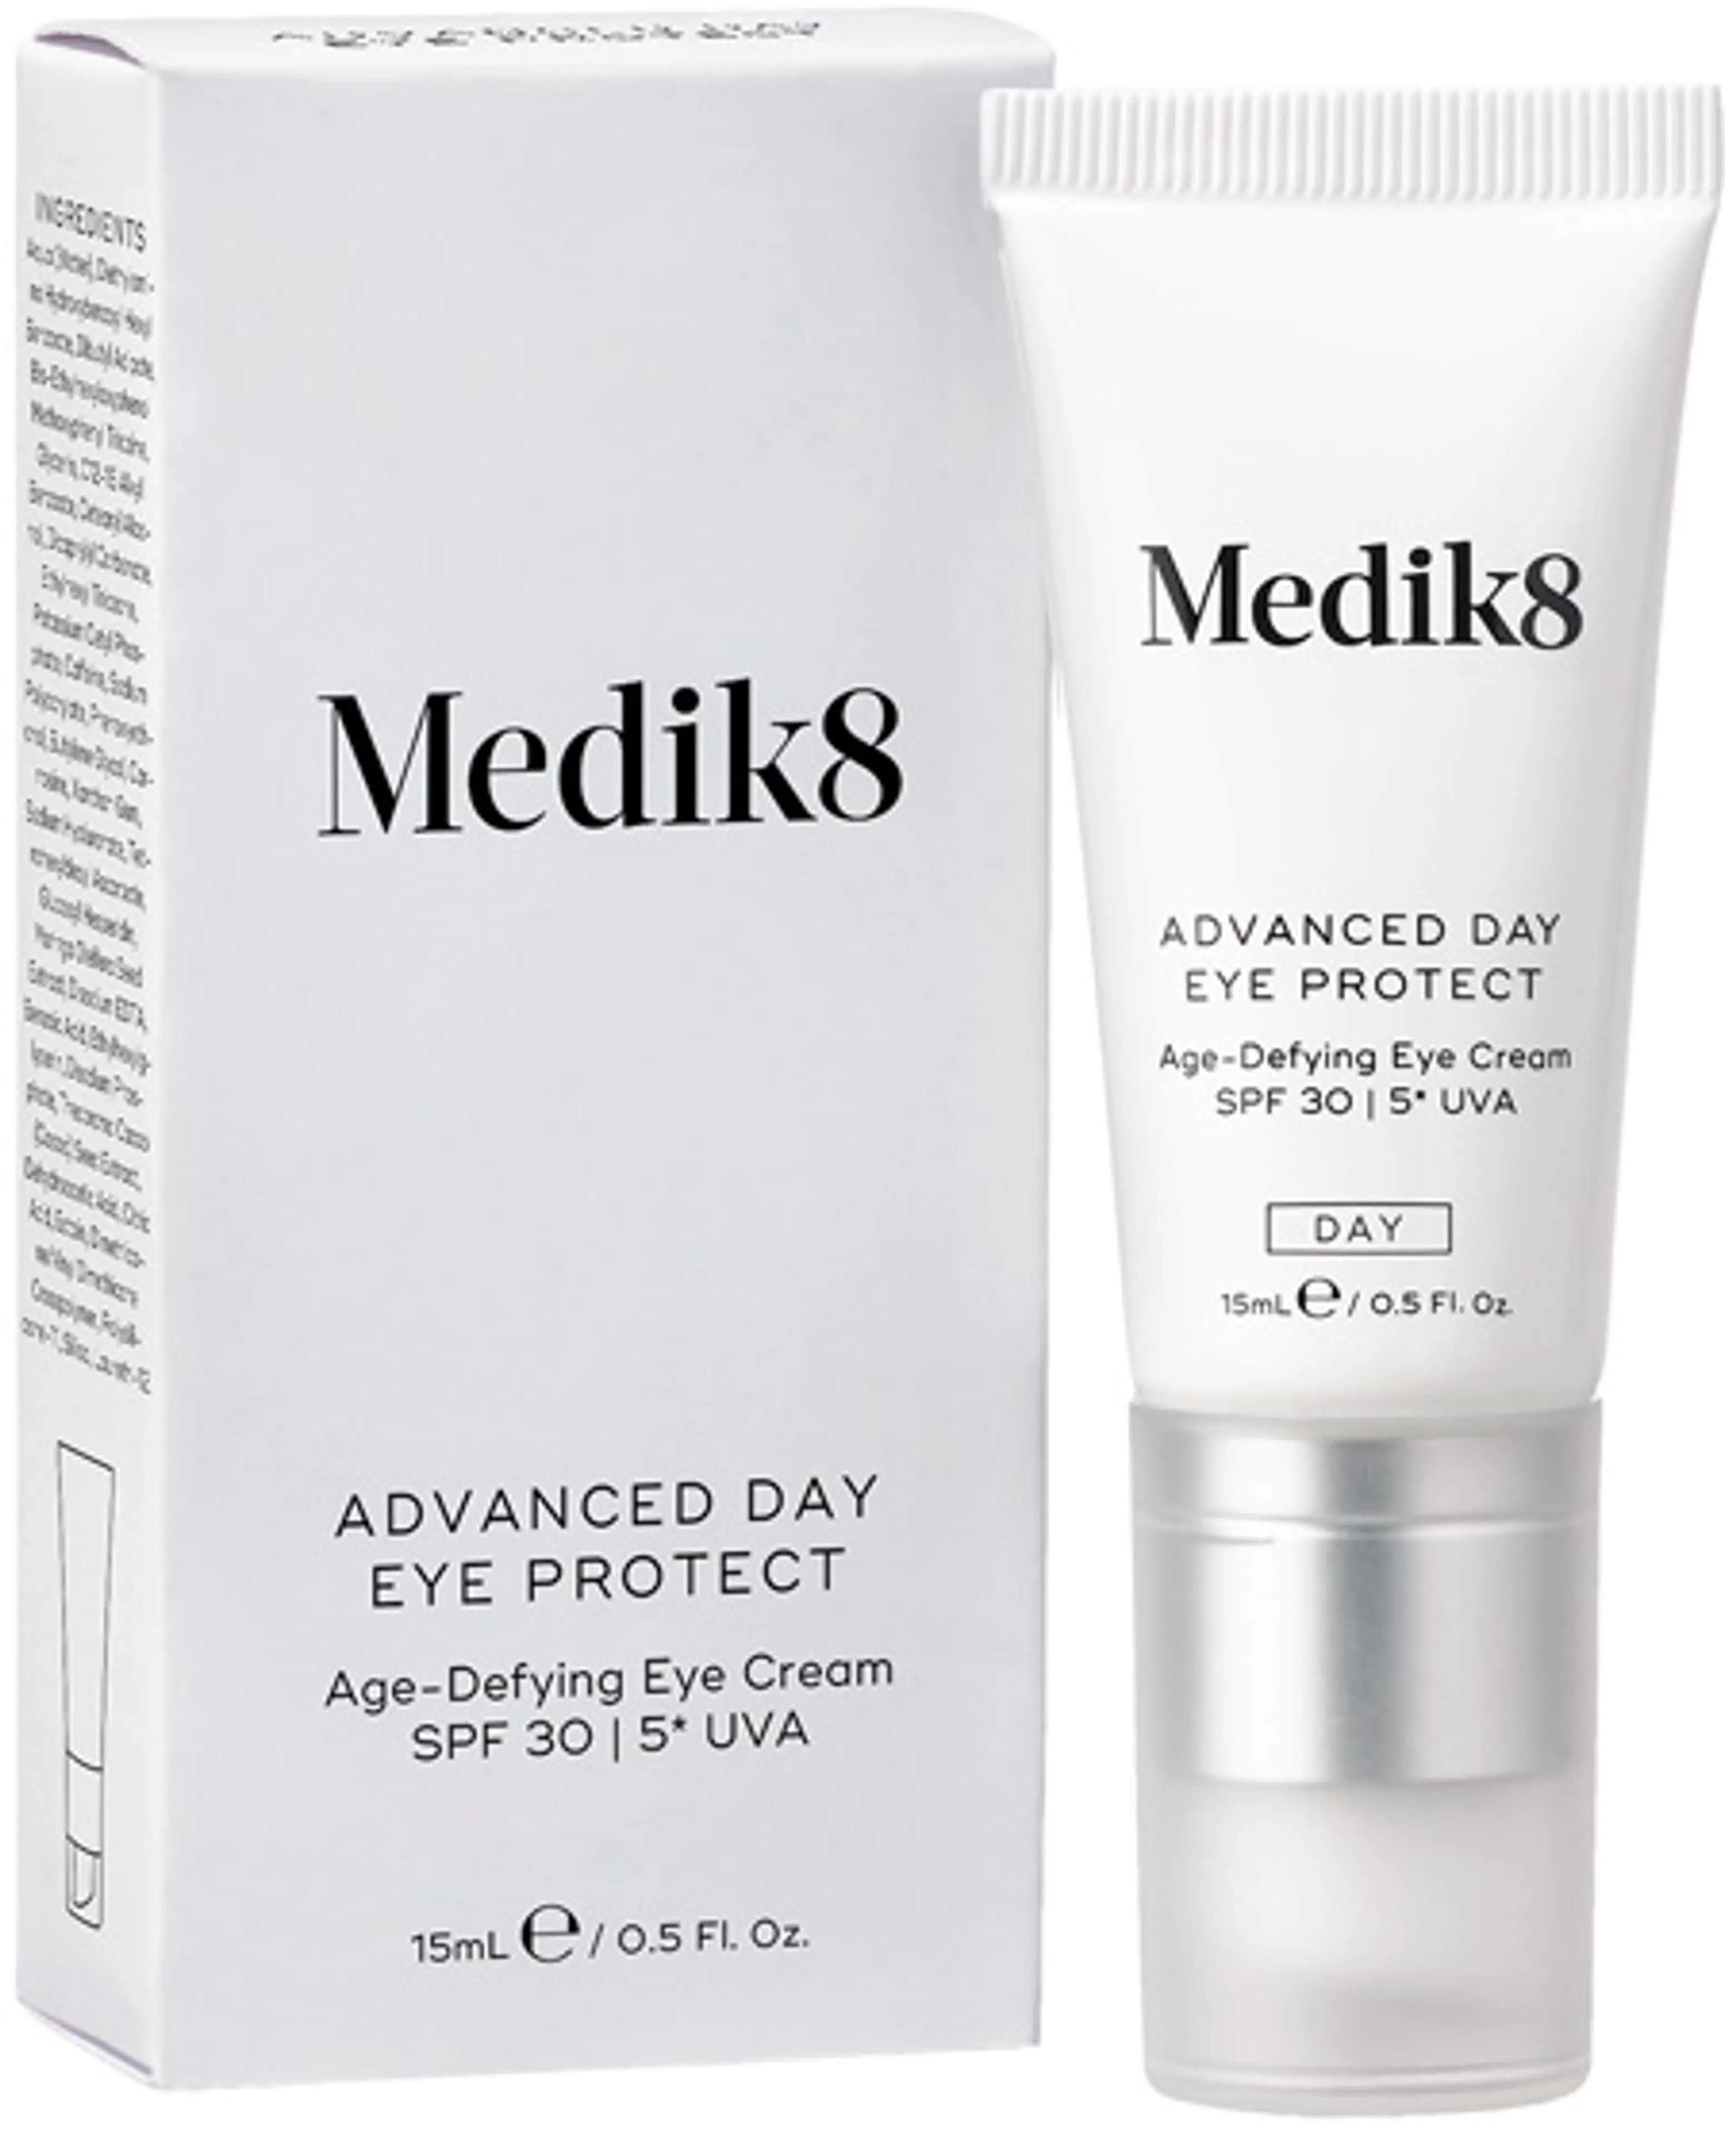 Medik8 Advanced Day Eye Protect SPF 30 silmänympärysvoide 15 ml